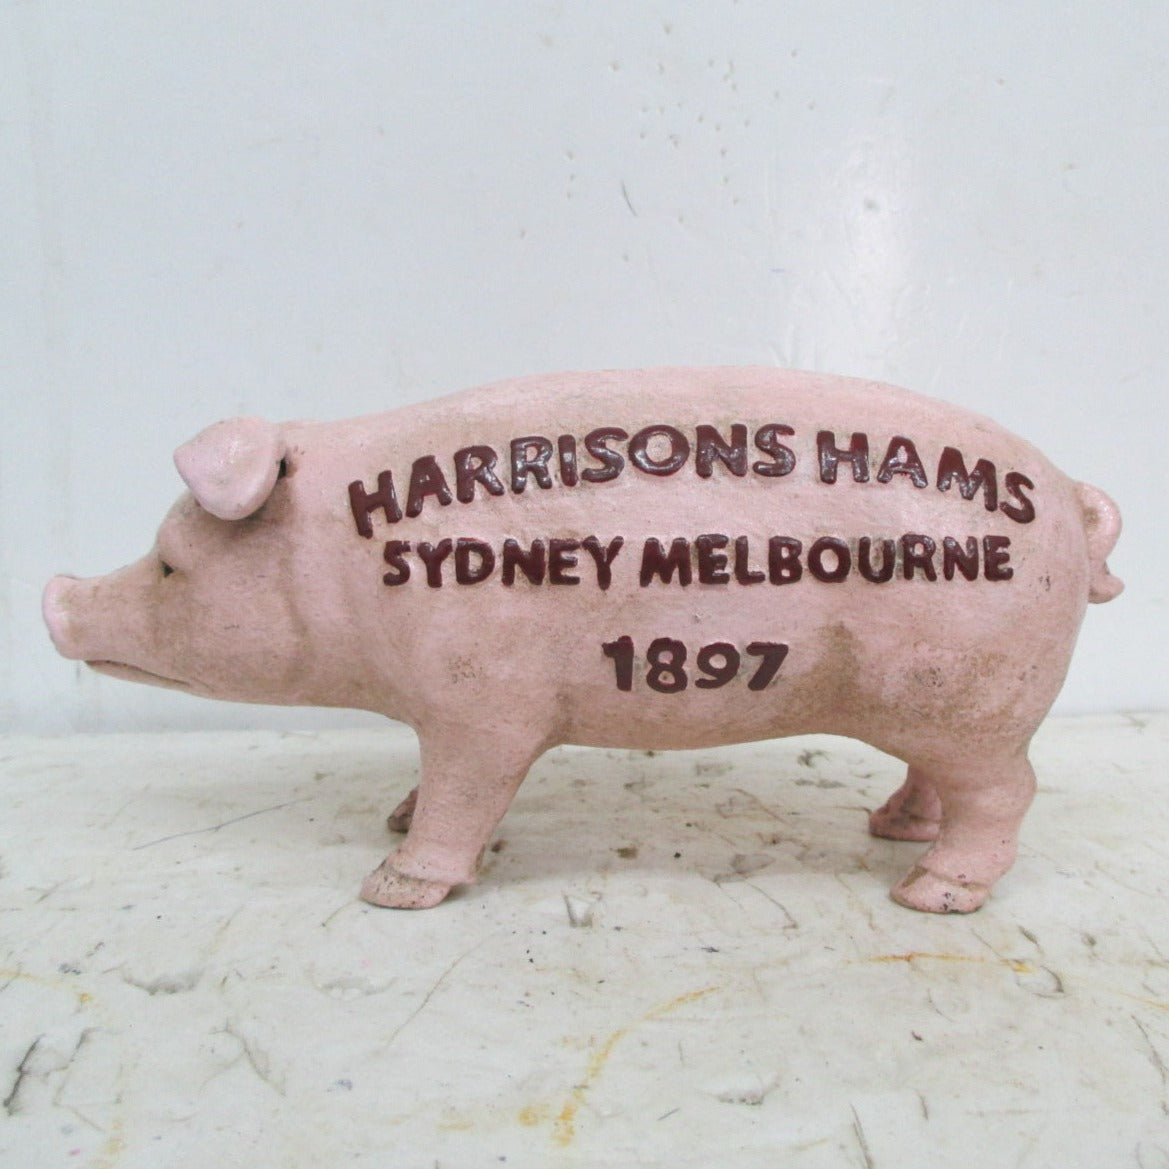 Standing Pig Bank - Sydney 1897